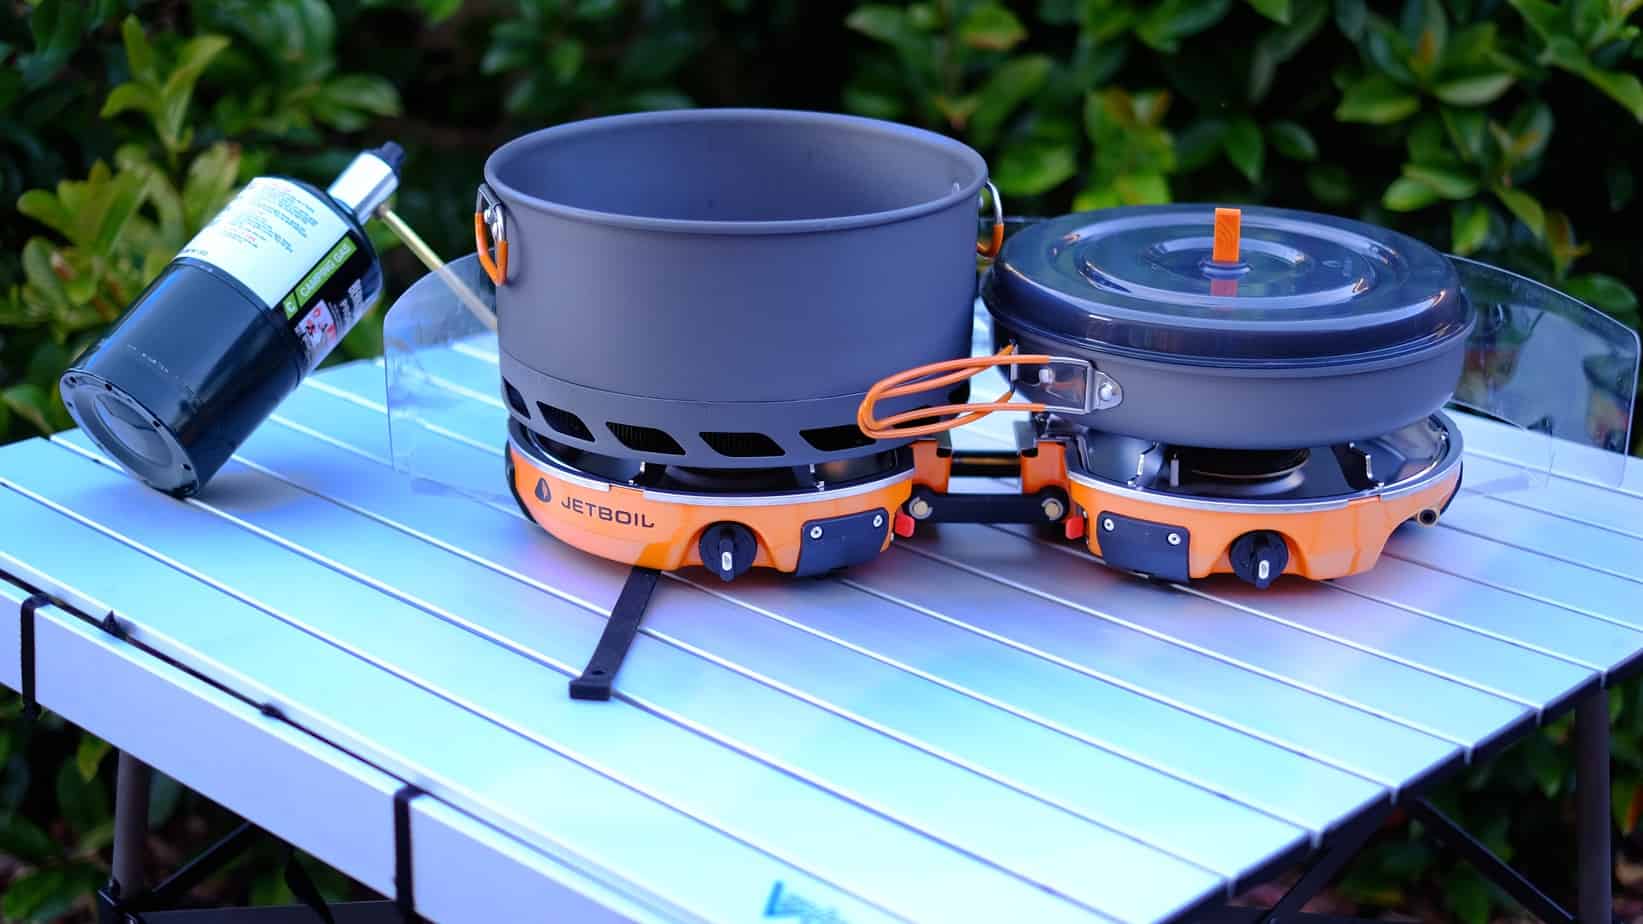 Jetboil Genesis 2-Burner Backpacking Stove Cooking System